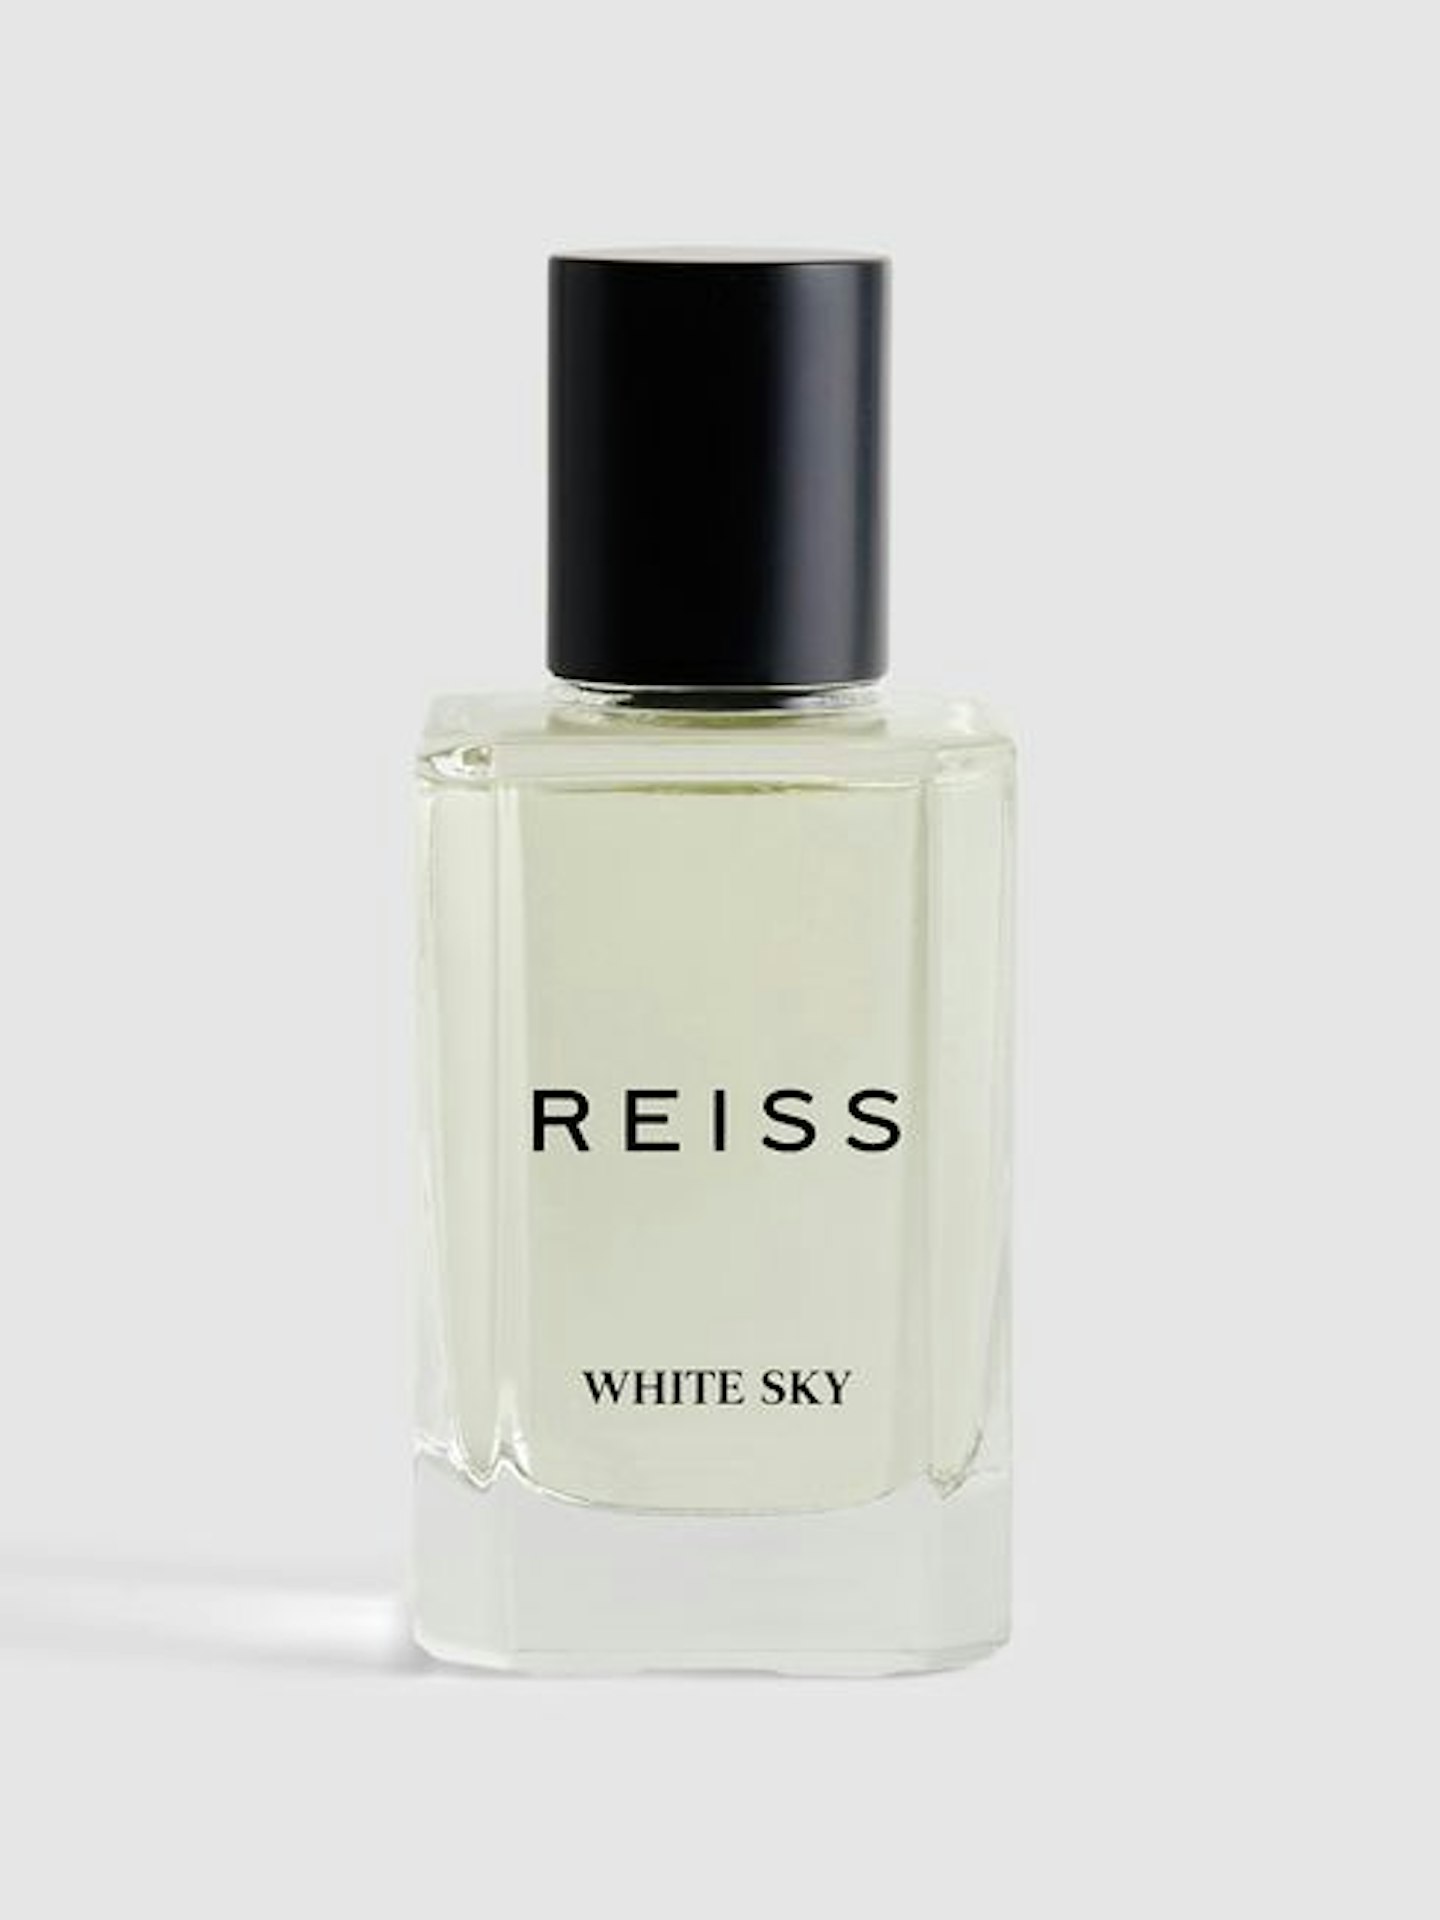 Reiss White Sky Perfume